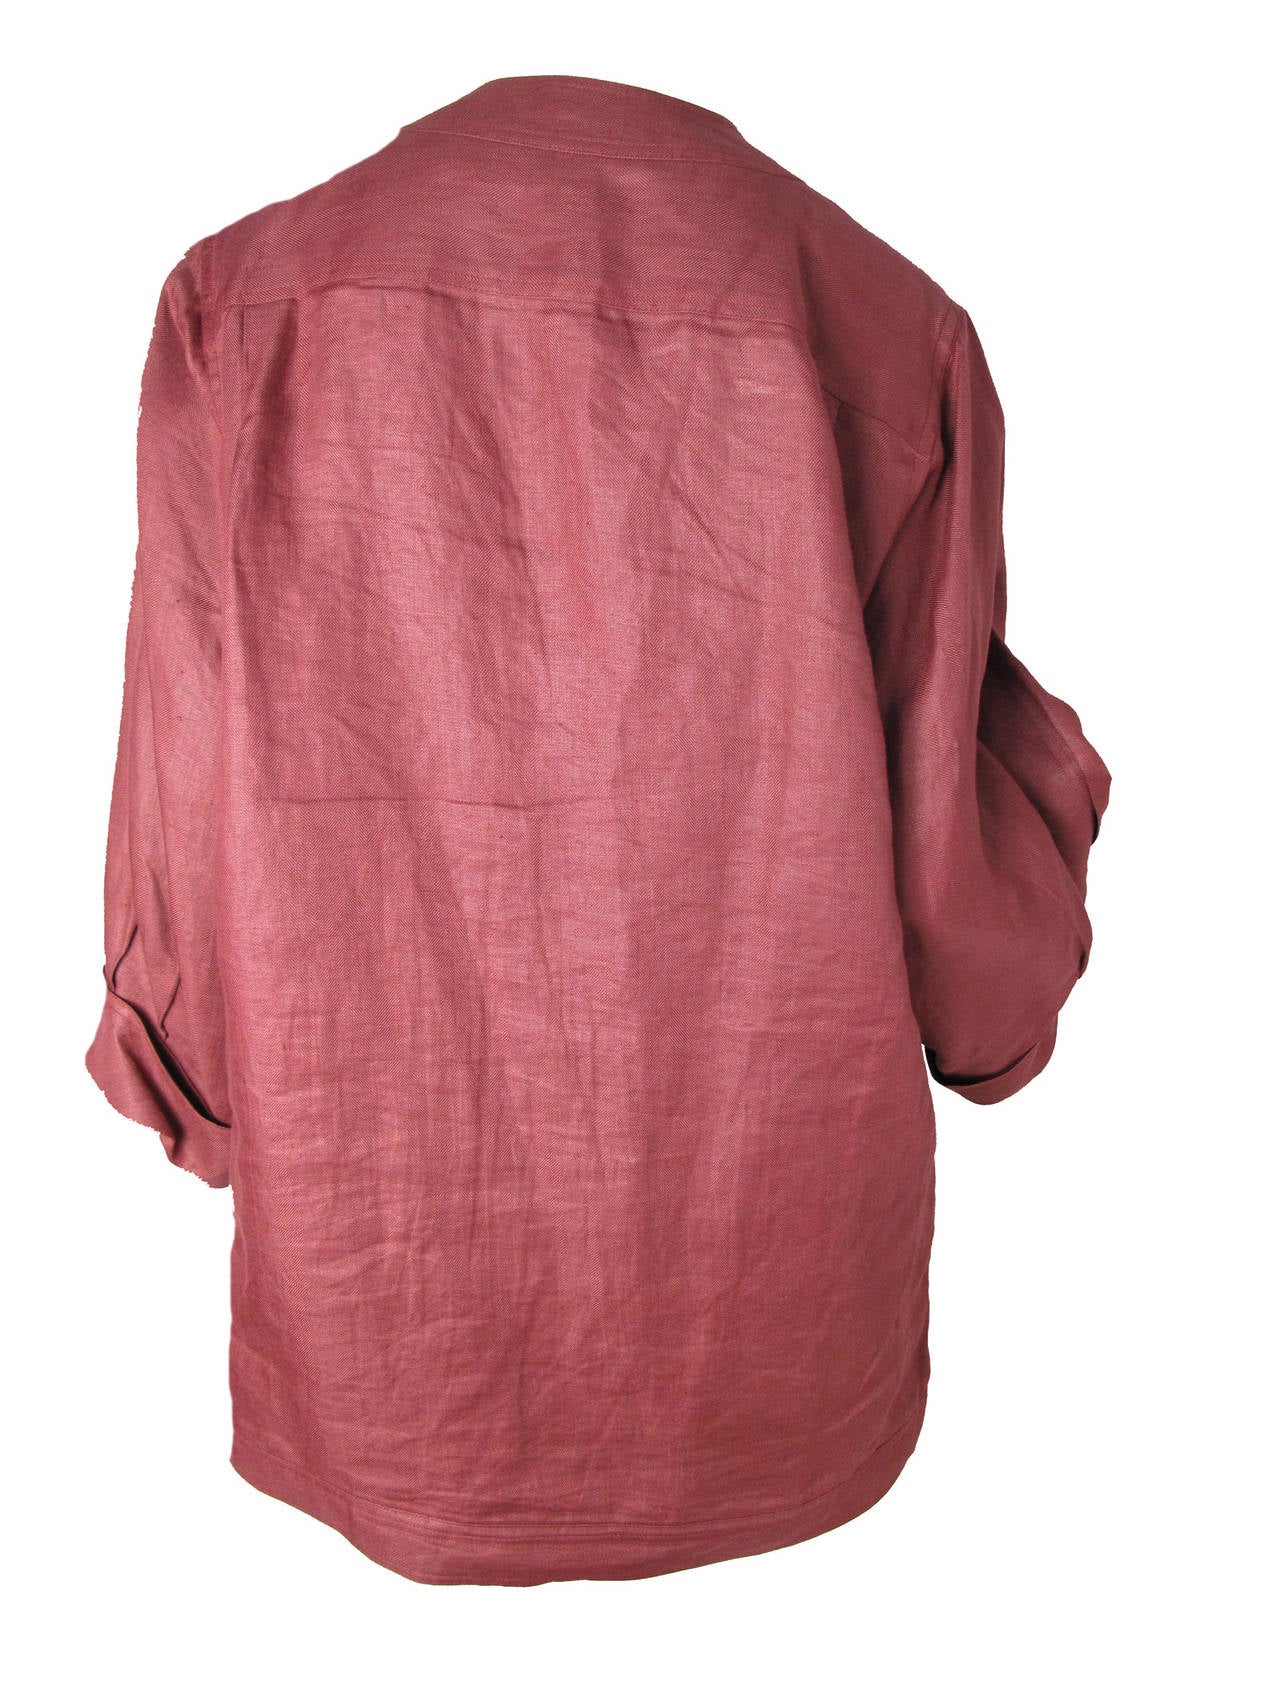 Pink 1970s Oscar de la Renta Linen Jacket